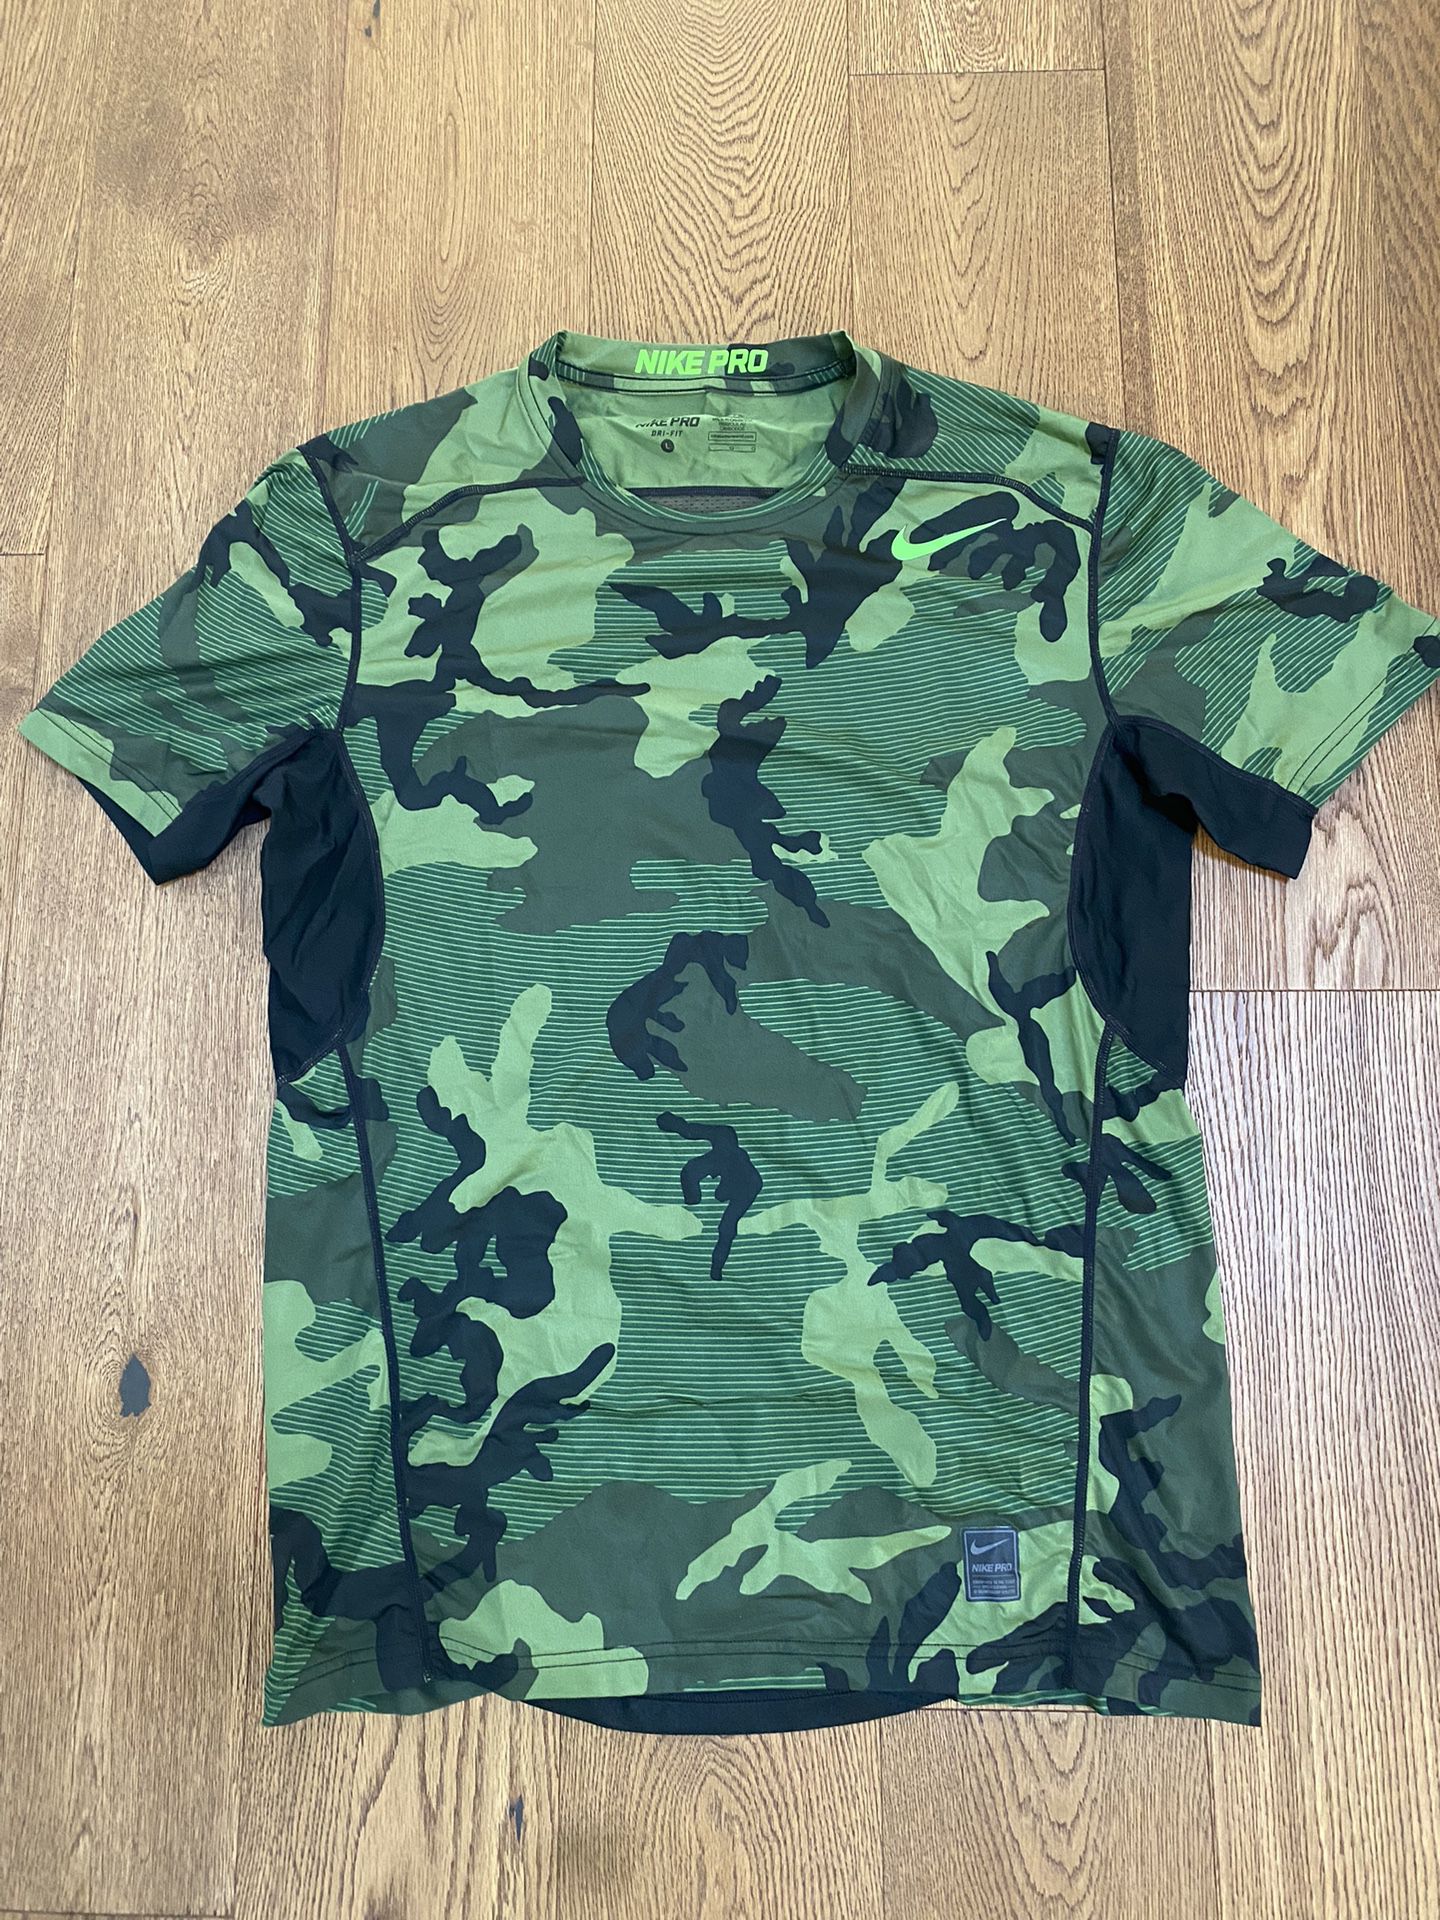 Nike Pro Combat Dri Fit Shirt 